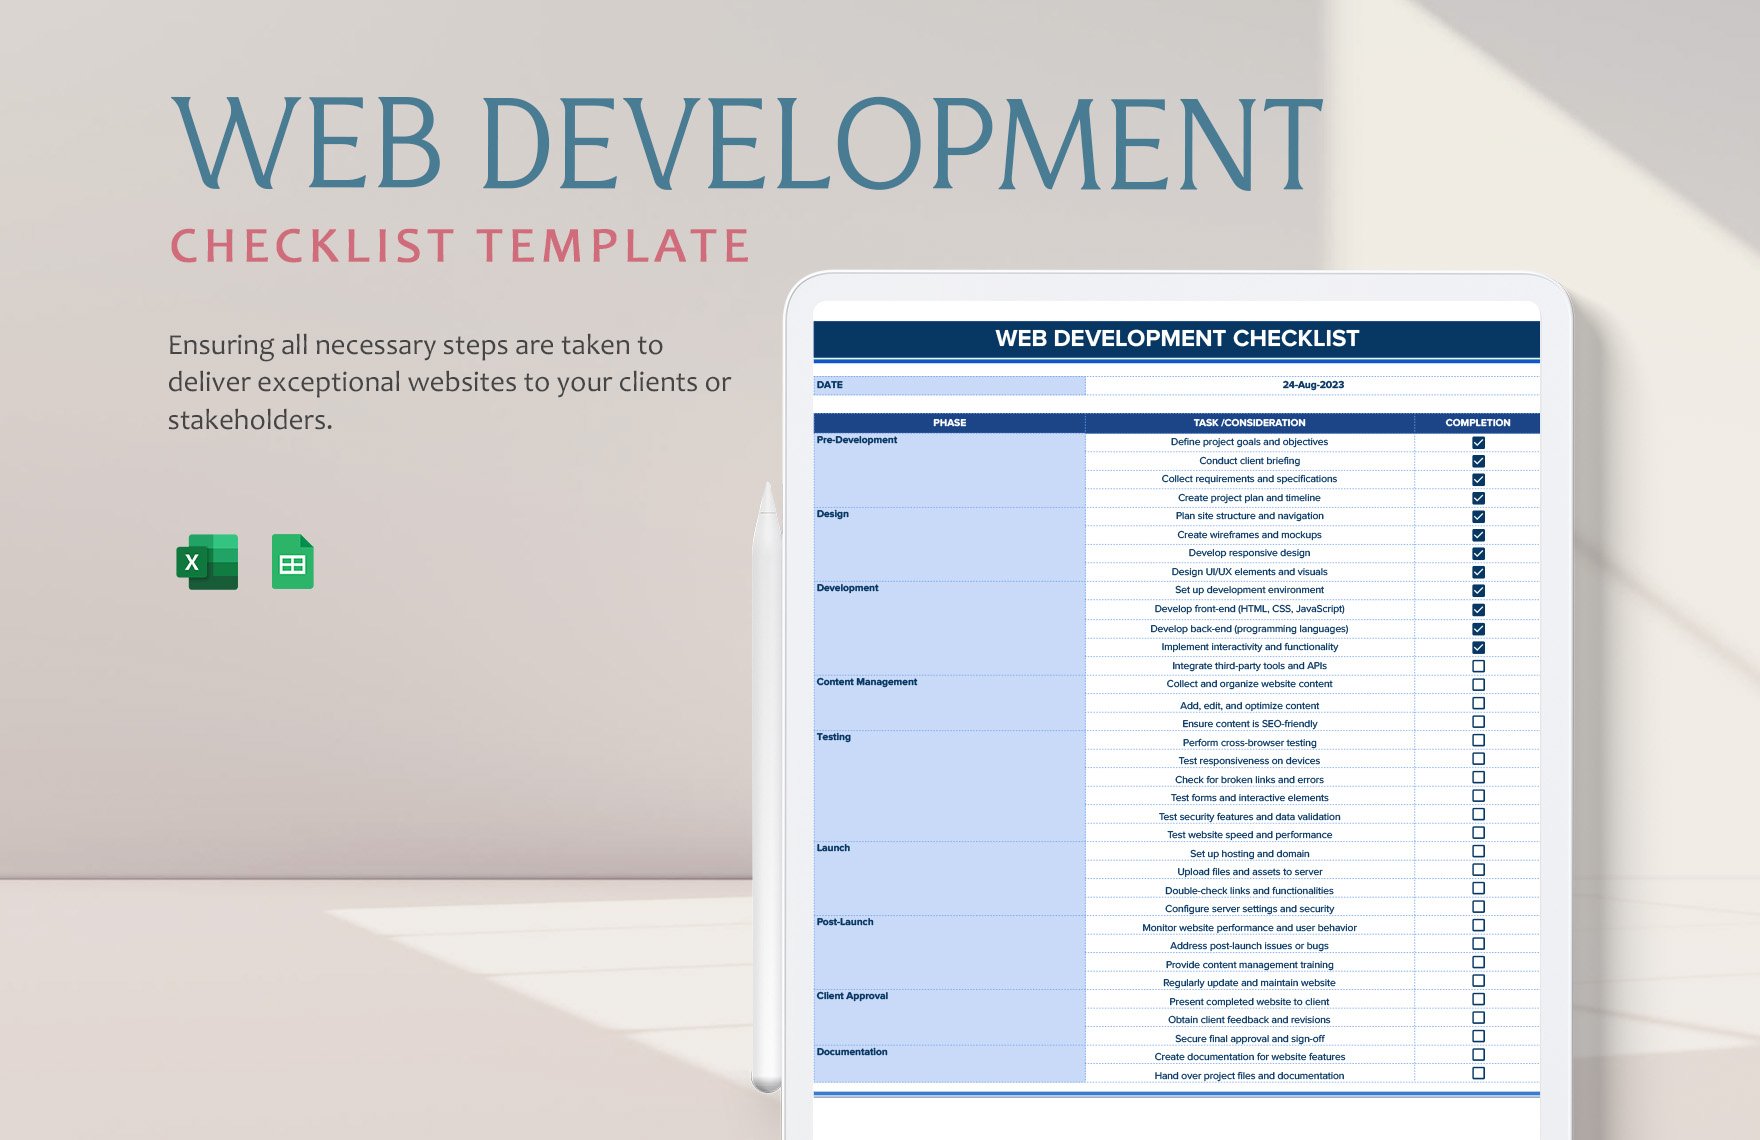 Web Development Checklist Template in Excel, Google Sheets